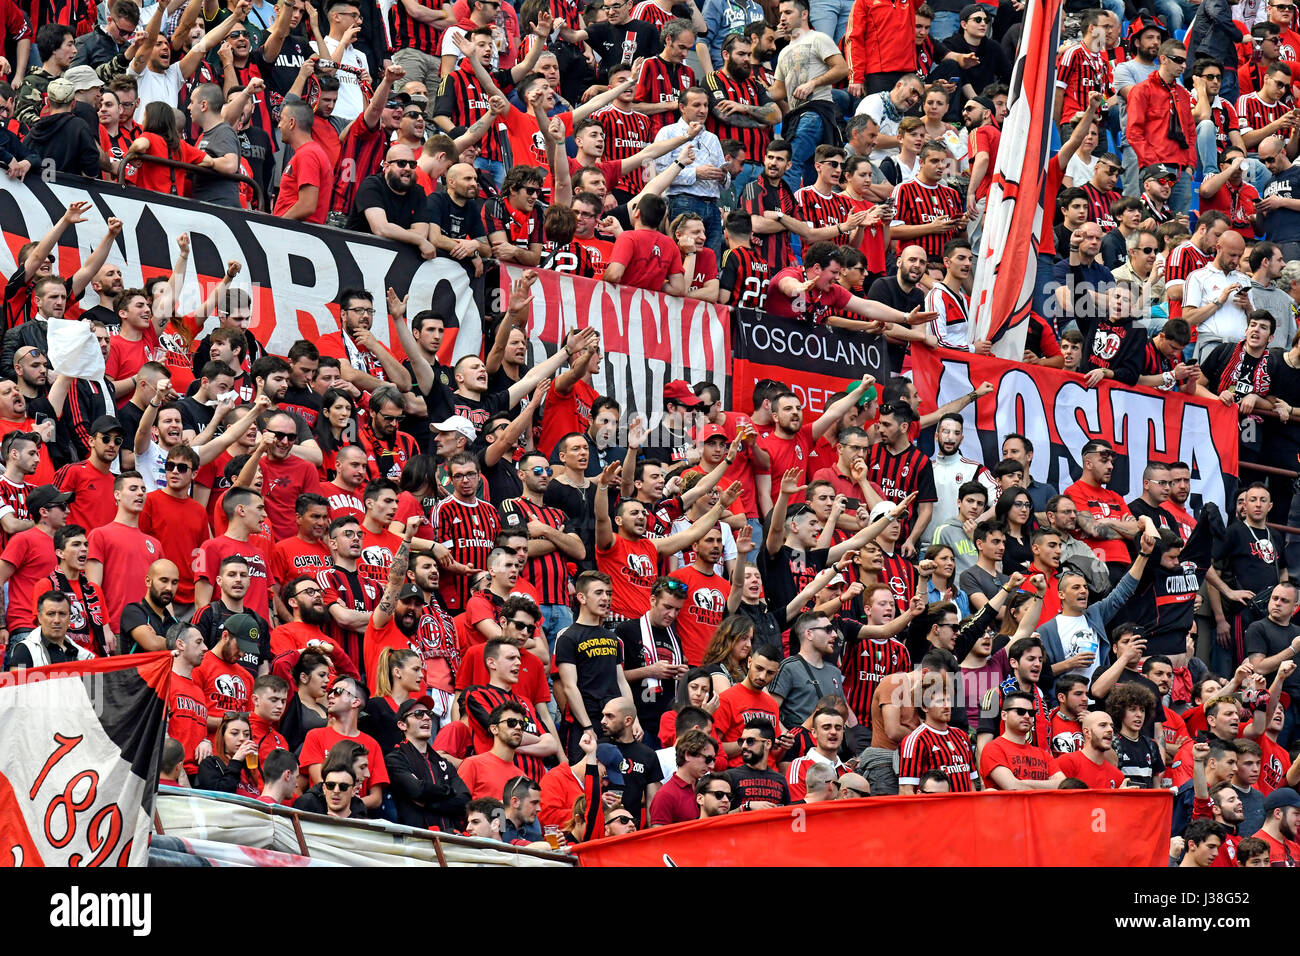 Les fans de l'AC Milan applaudissent au stade de football de San siro, à Milan. Banque D'Images